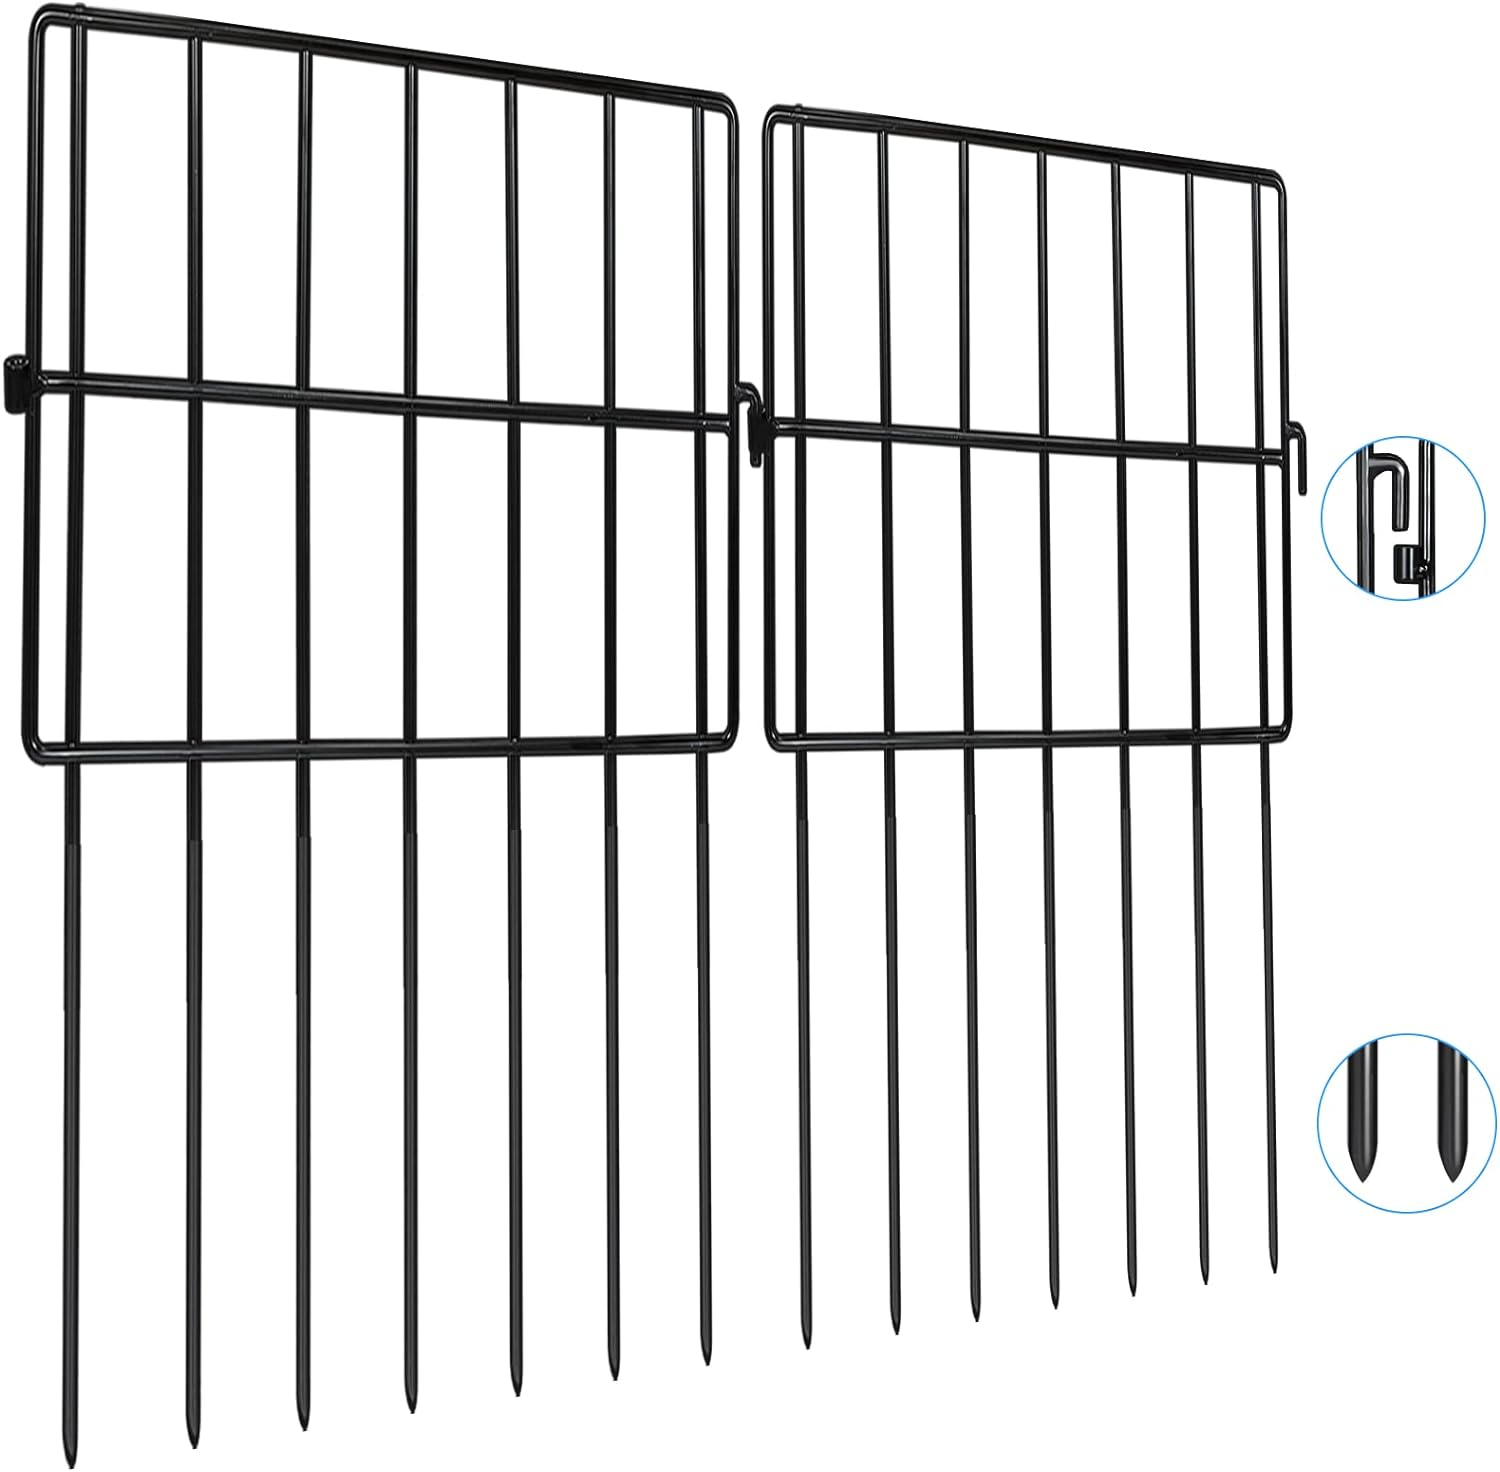 20 Pack Animal Barrier Fences, 1.5" Gap No Digging Garden Fence Panels, Metals Black Deterrent Fence for Dogs Rabbits, Decorative Fence for Outdoor Landscape Patio Total 20ft(L)×16in(H)